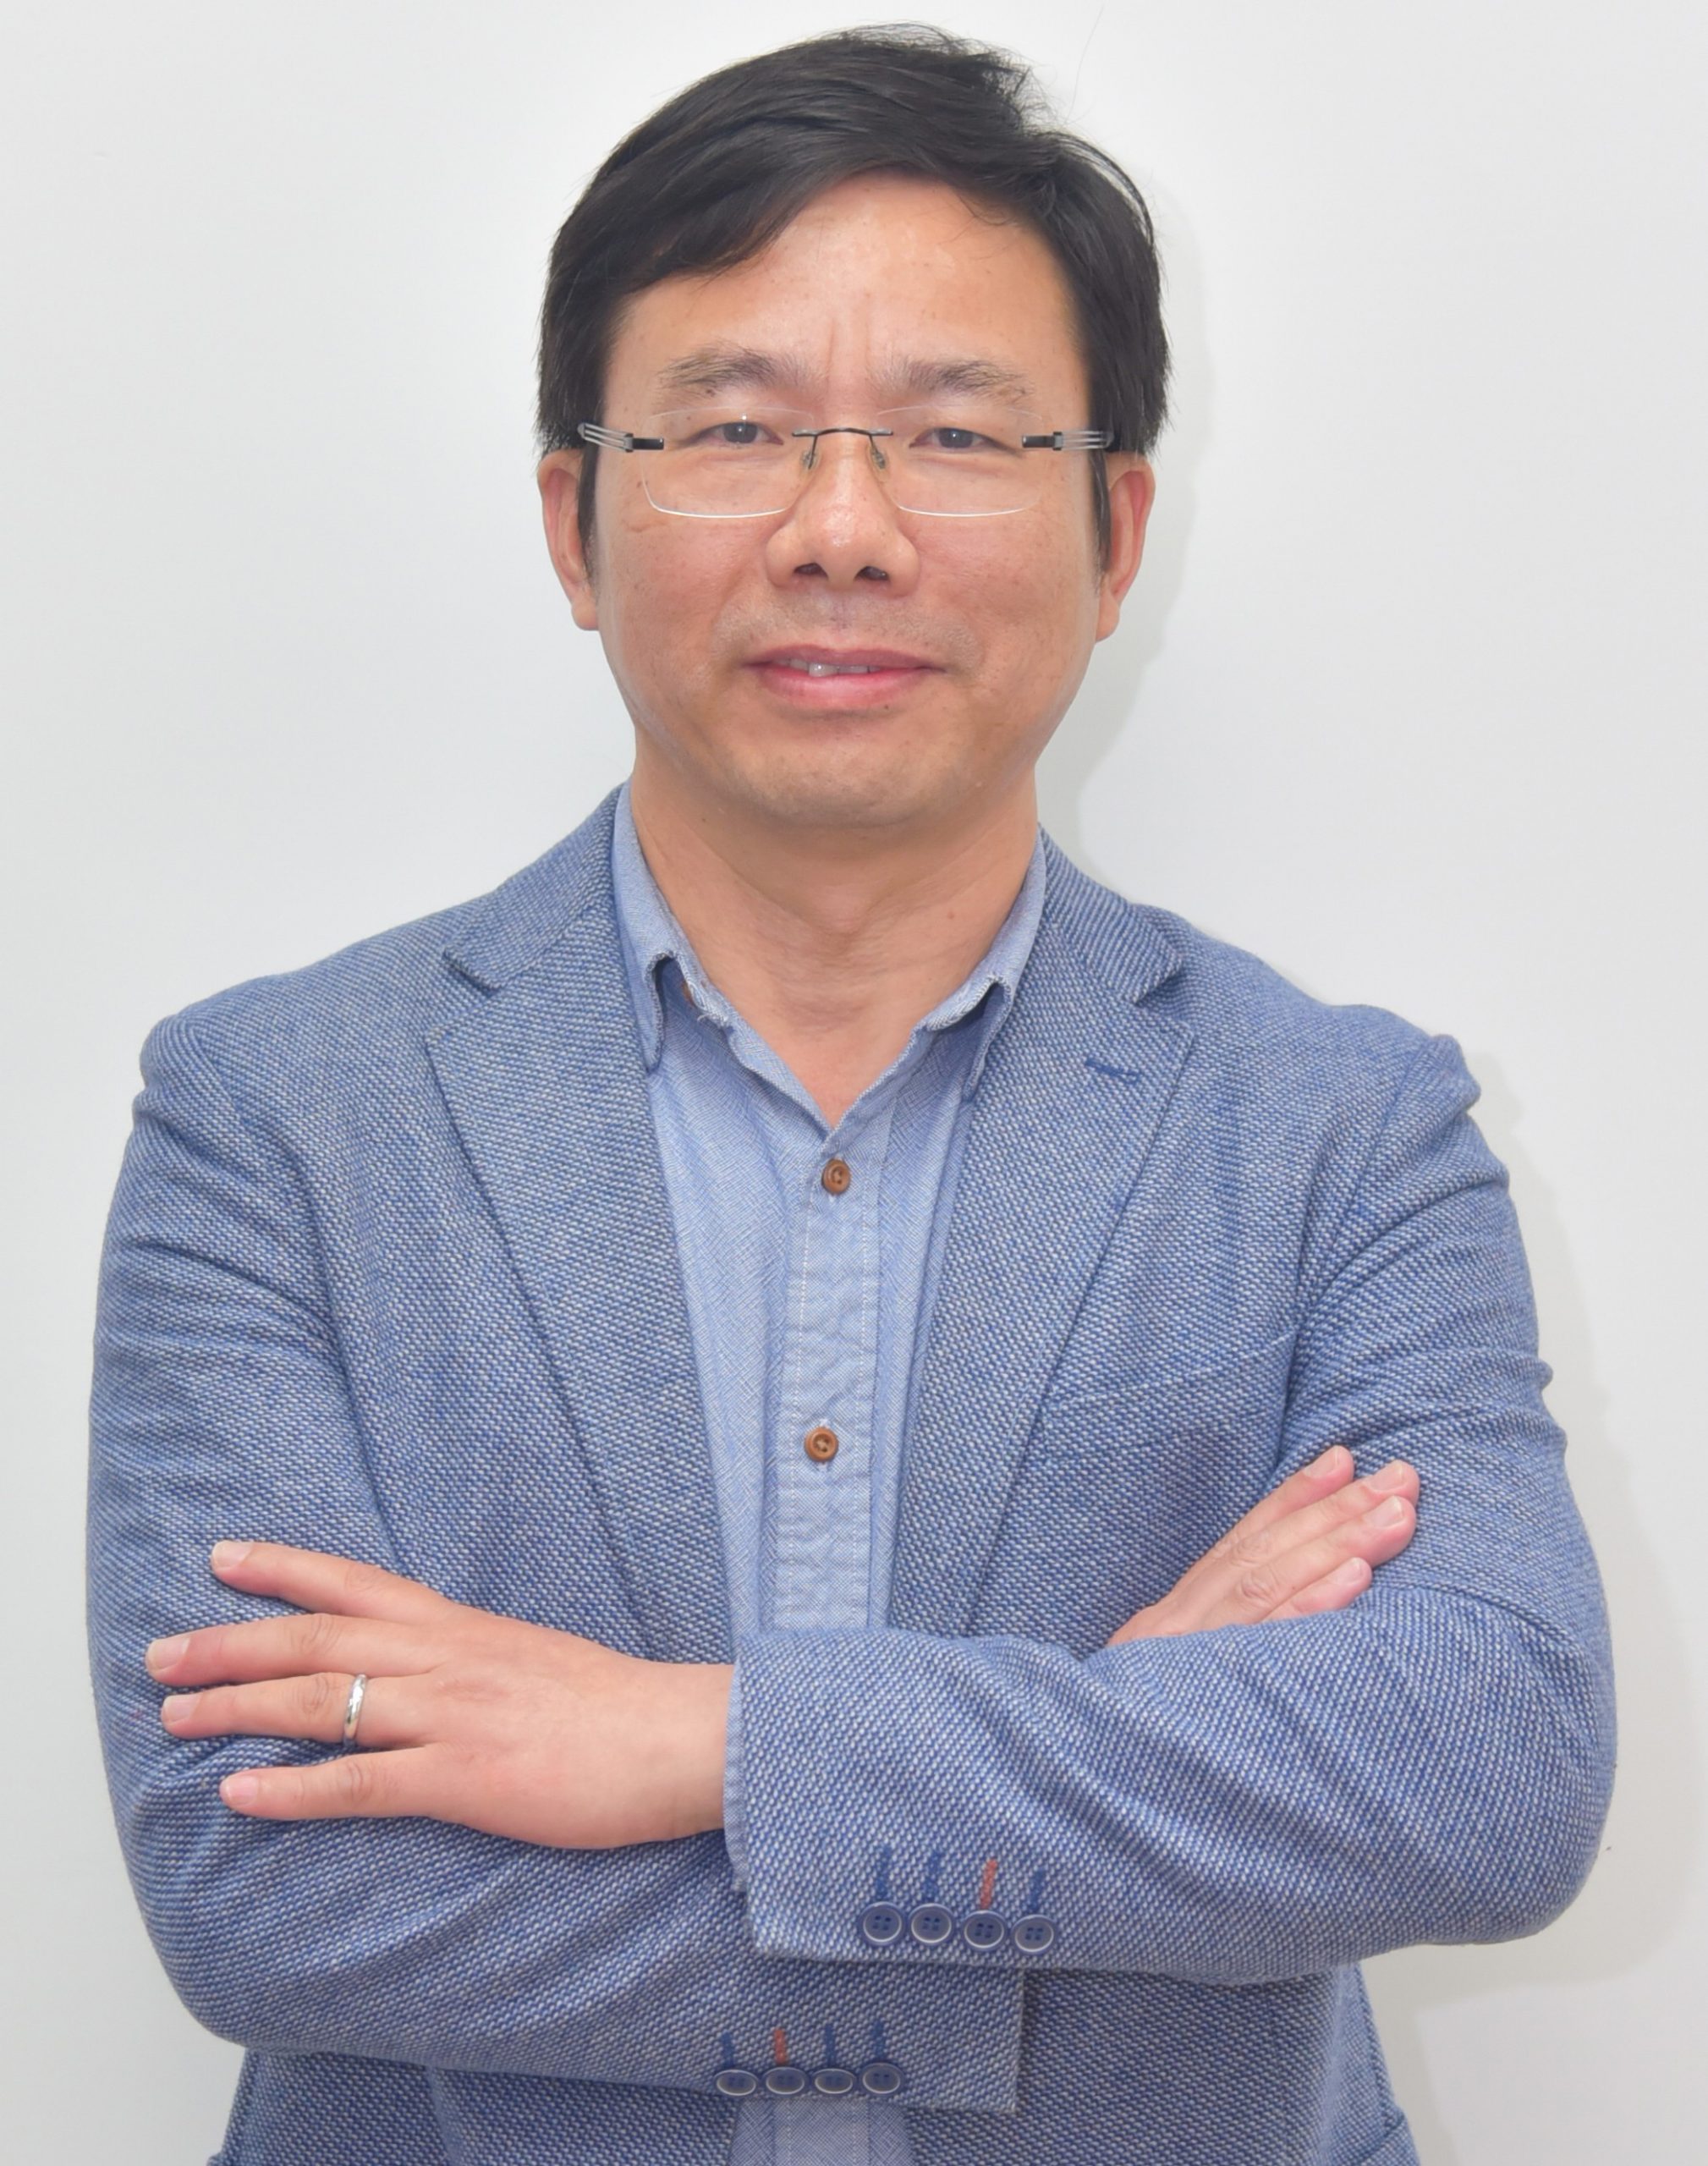 Prof. Shao Ping LI